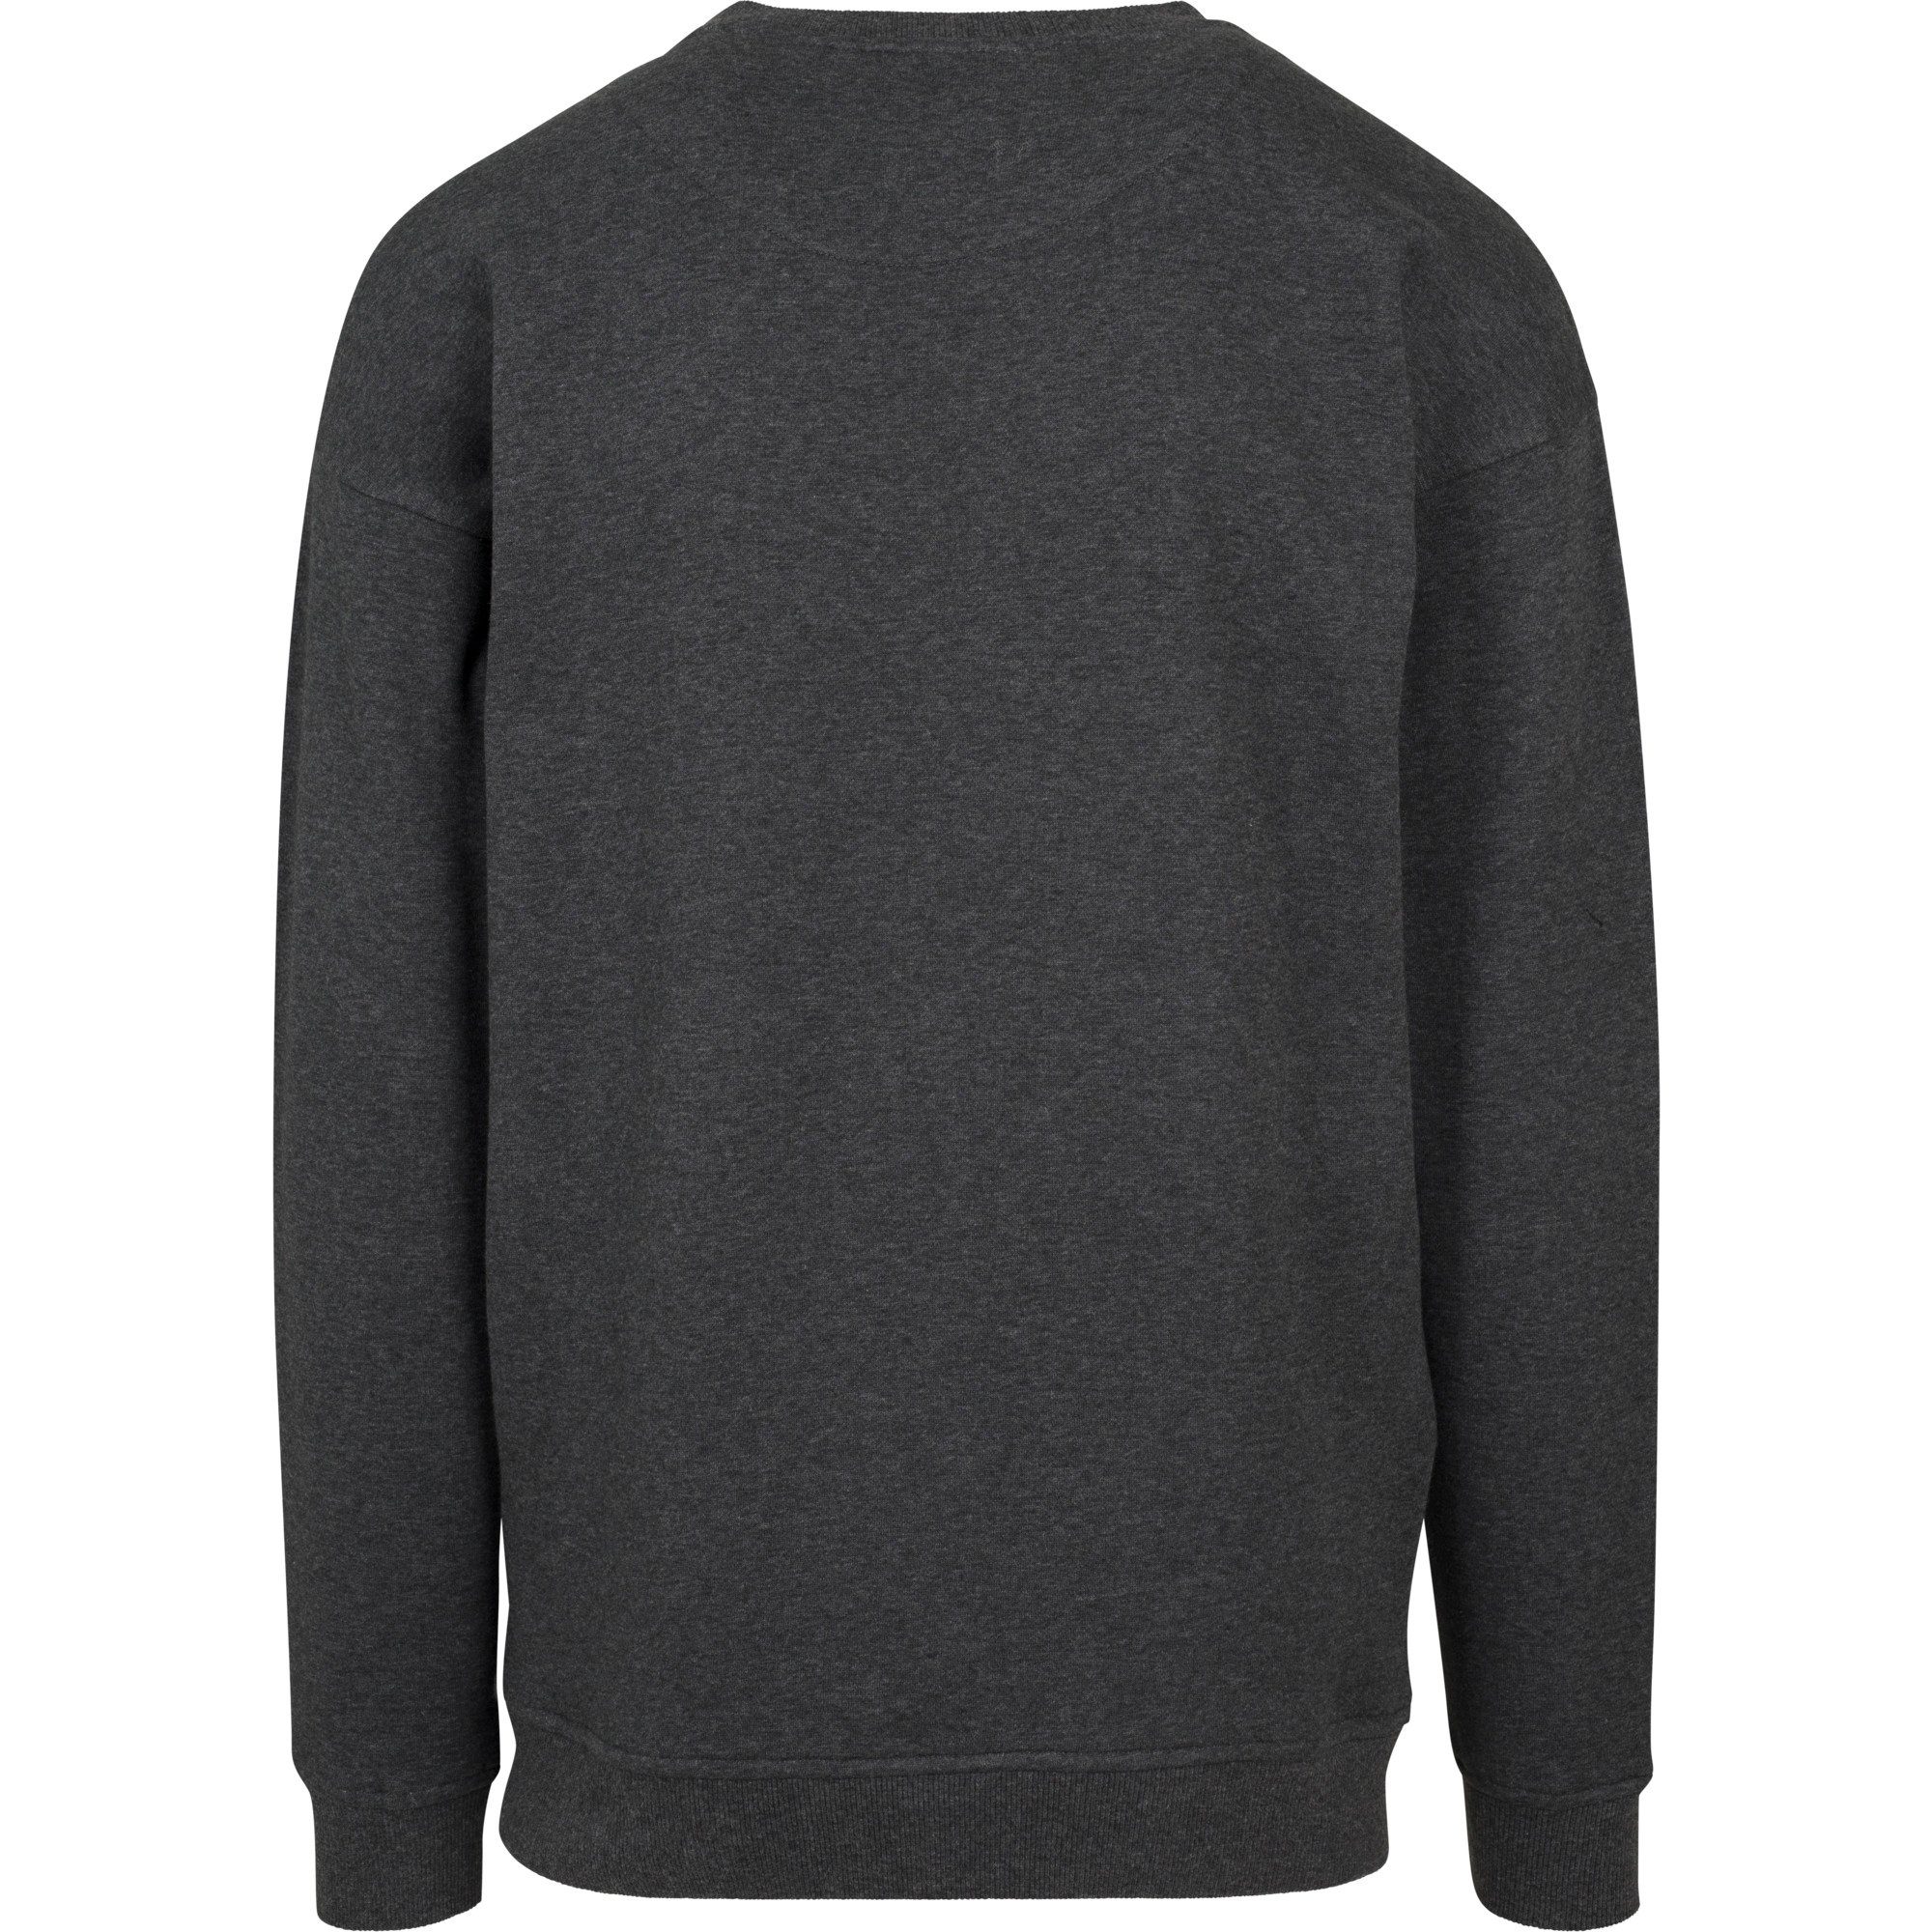 5XL Your hellgrau bis Sweatshirt Pullover Build S Crewneck Herren Brand schwerer Sweater